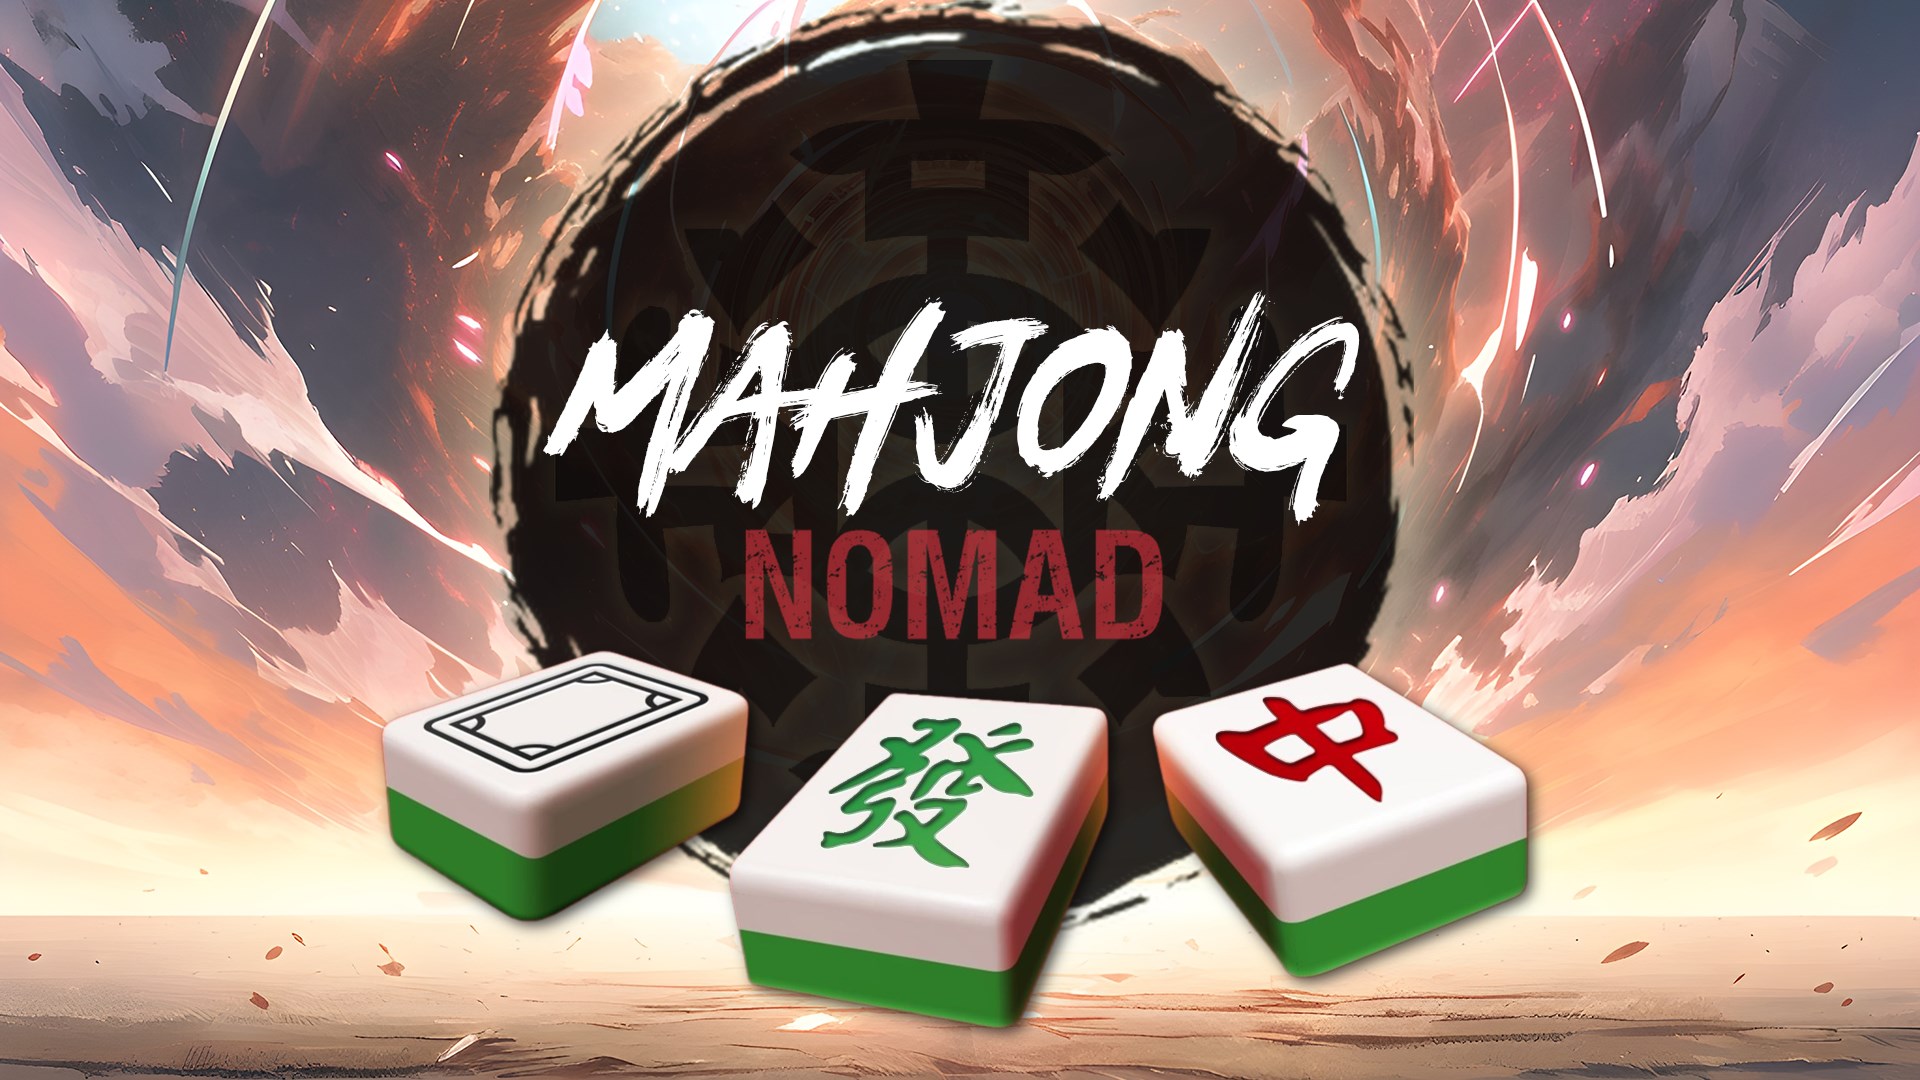 Winter Mahjong - play free online in full screen